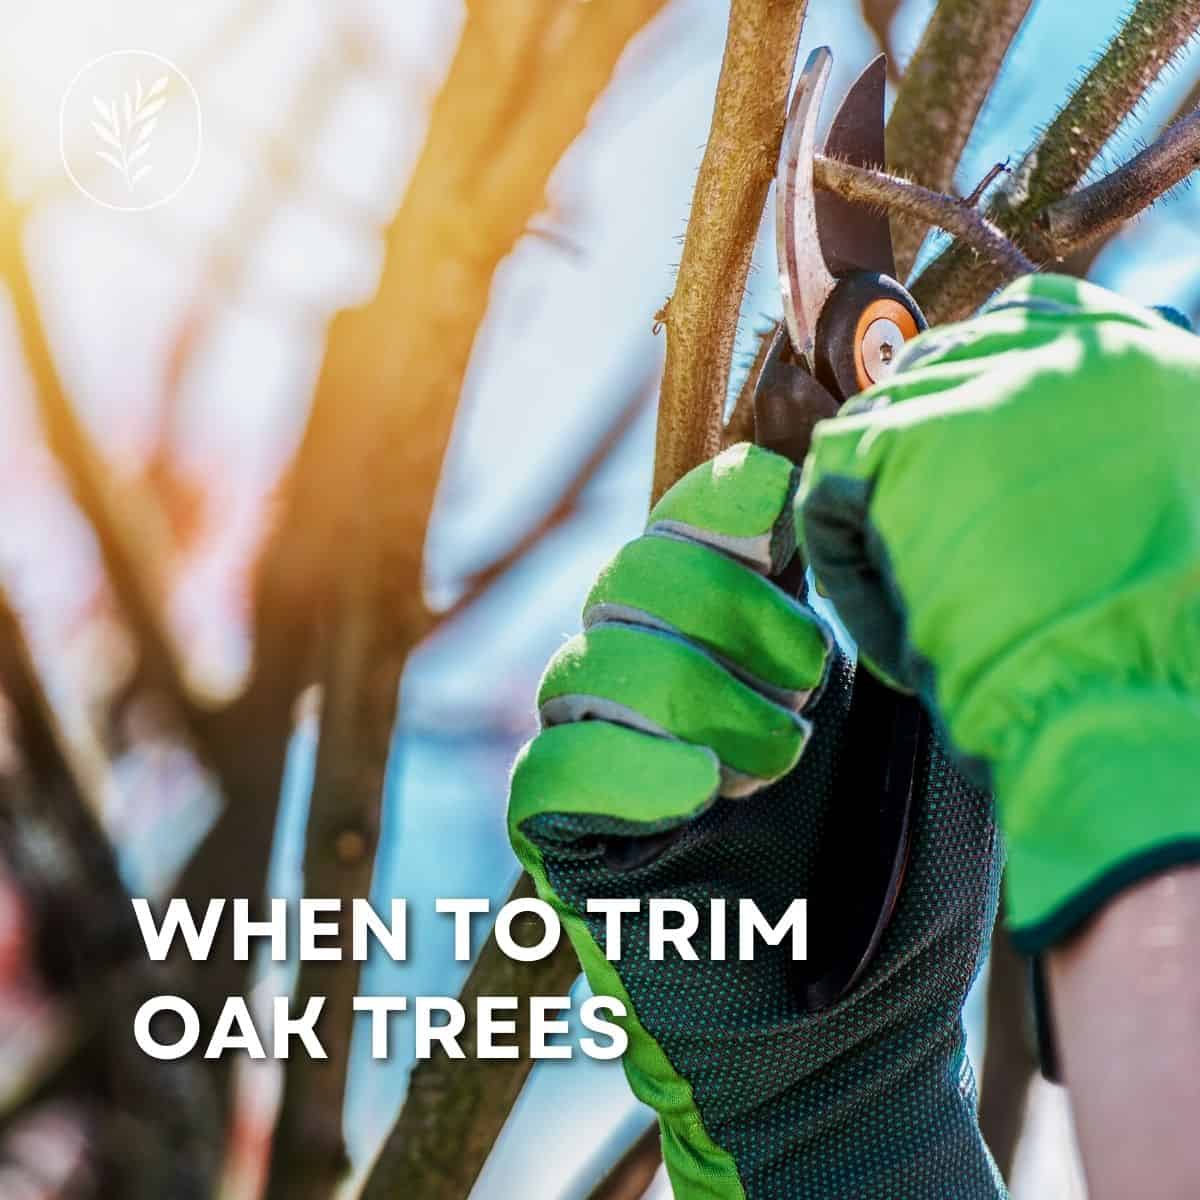 When to trim oak trees via @home4theharvest